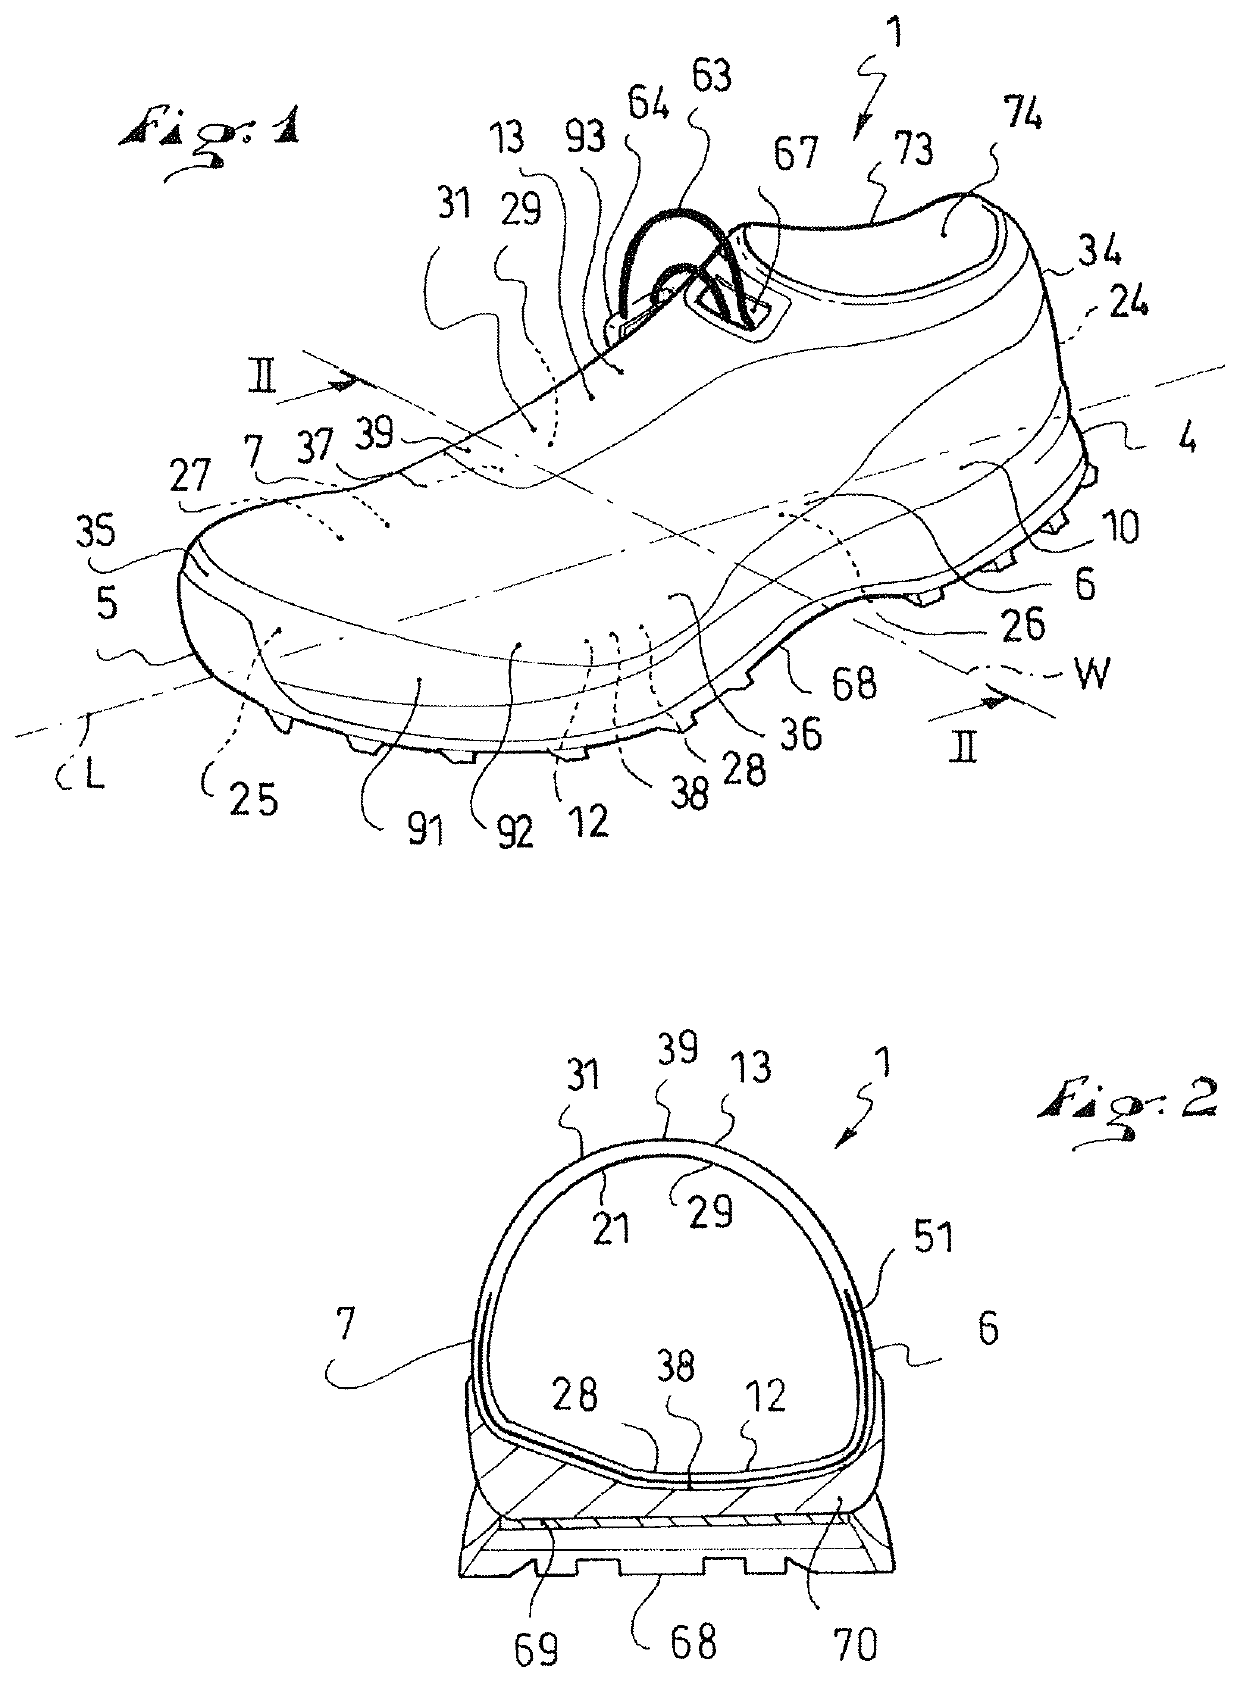 Footwear item having a simplified structure